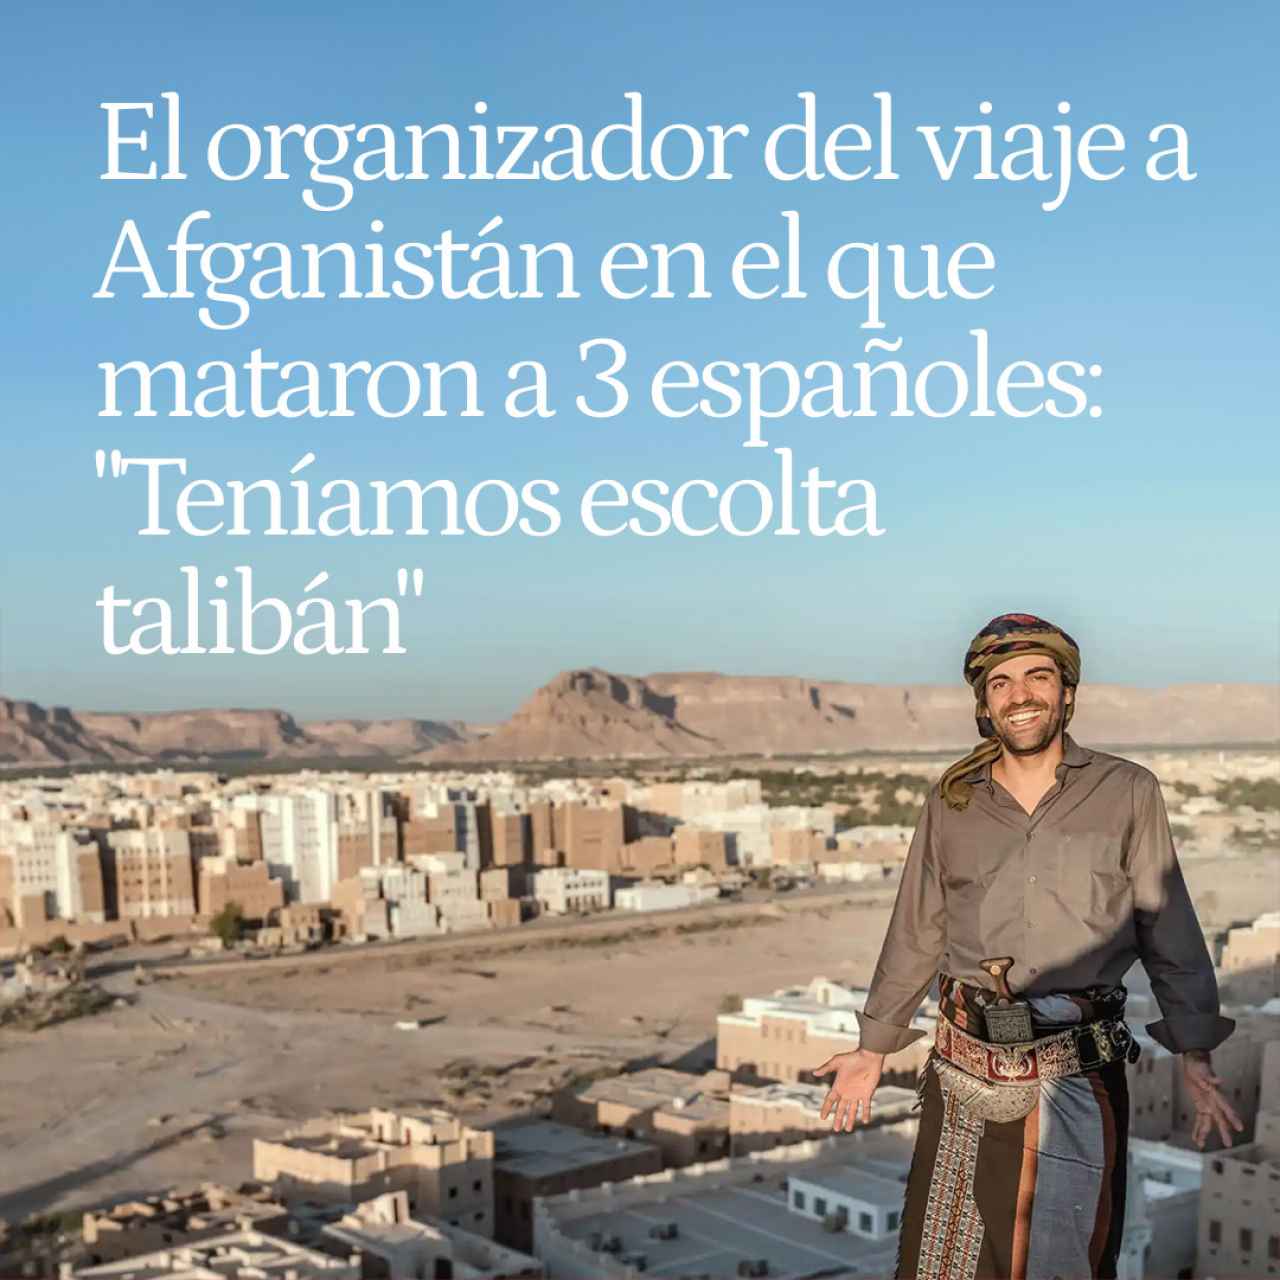 Joan Torres, organizador del viaje a Afganistán en el que mataron a 3 españoles: "Teníamos escolta talibán"